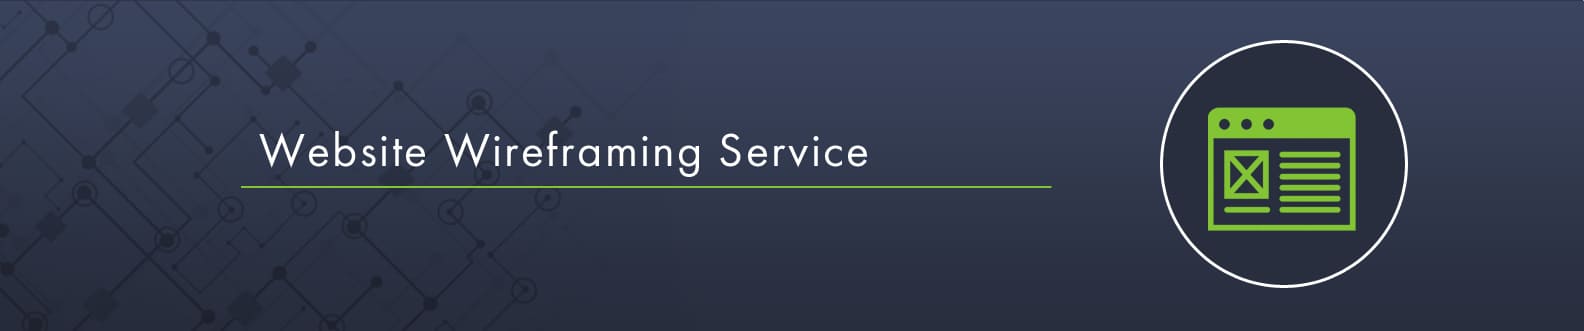 website wireframing service